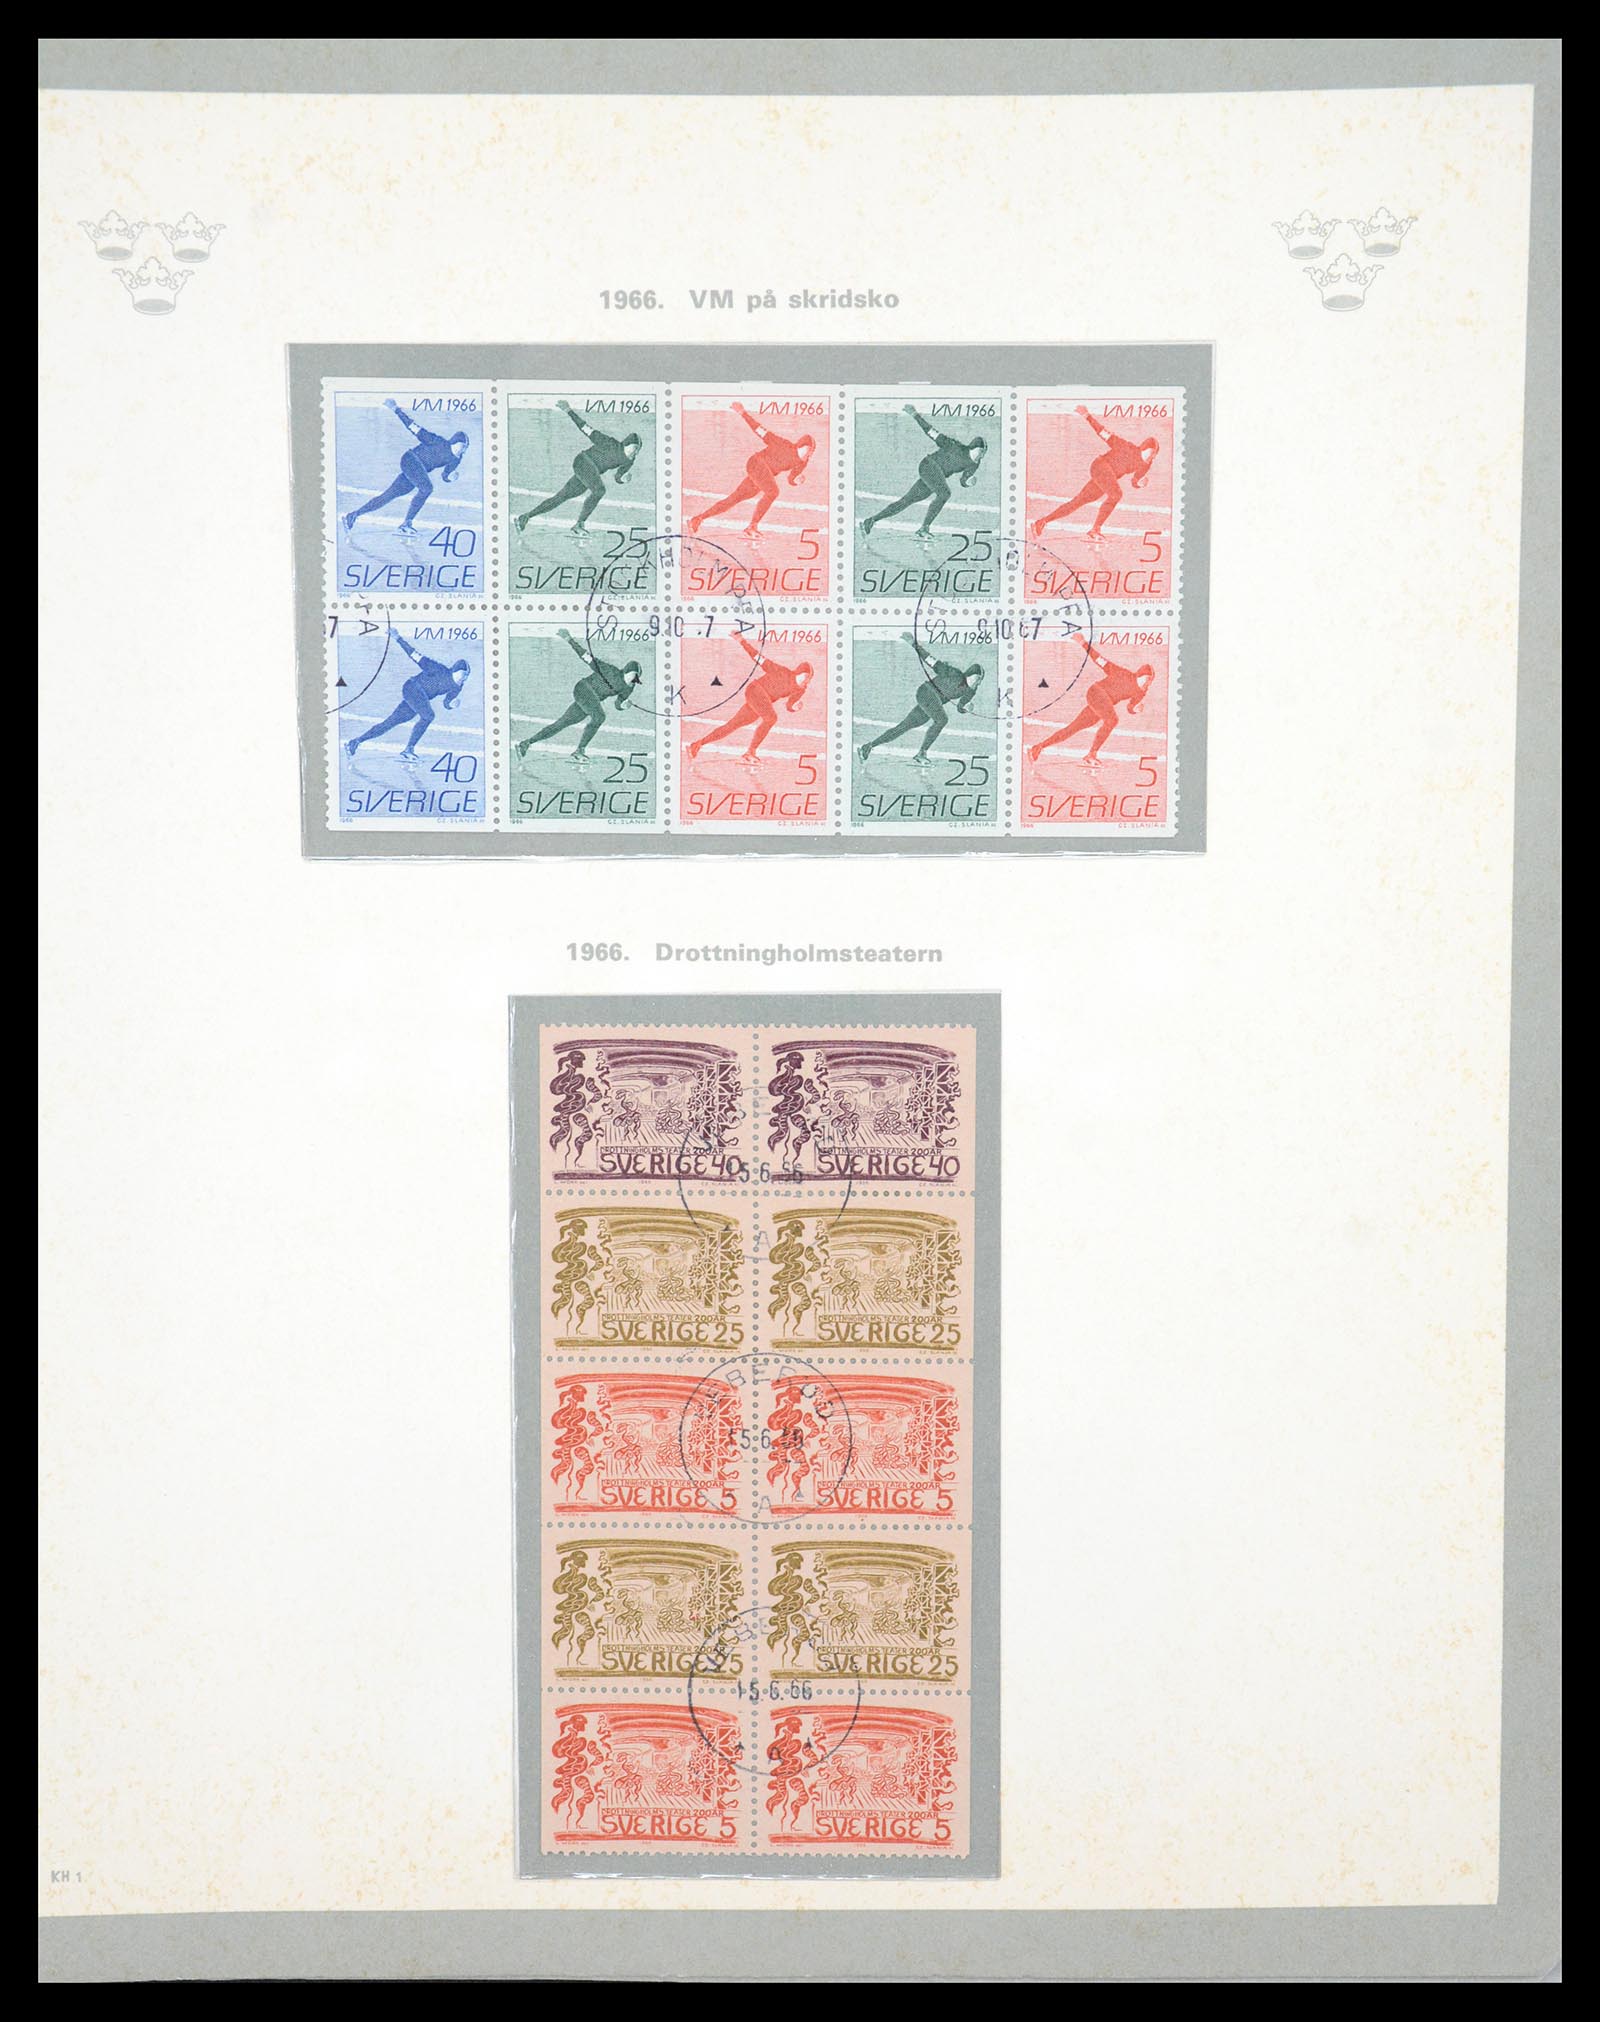 36579 113 - Stamp collection 36579 Zweden complete verzameling 1855-1975.